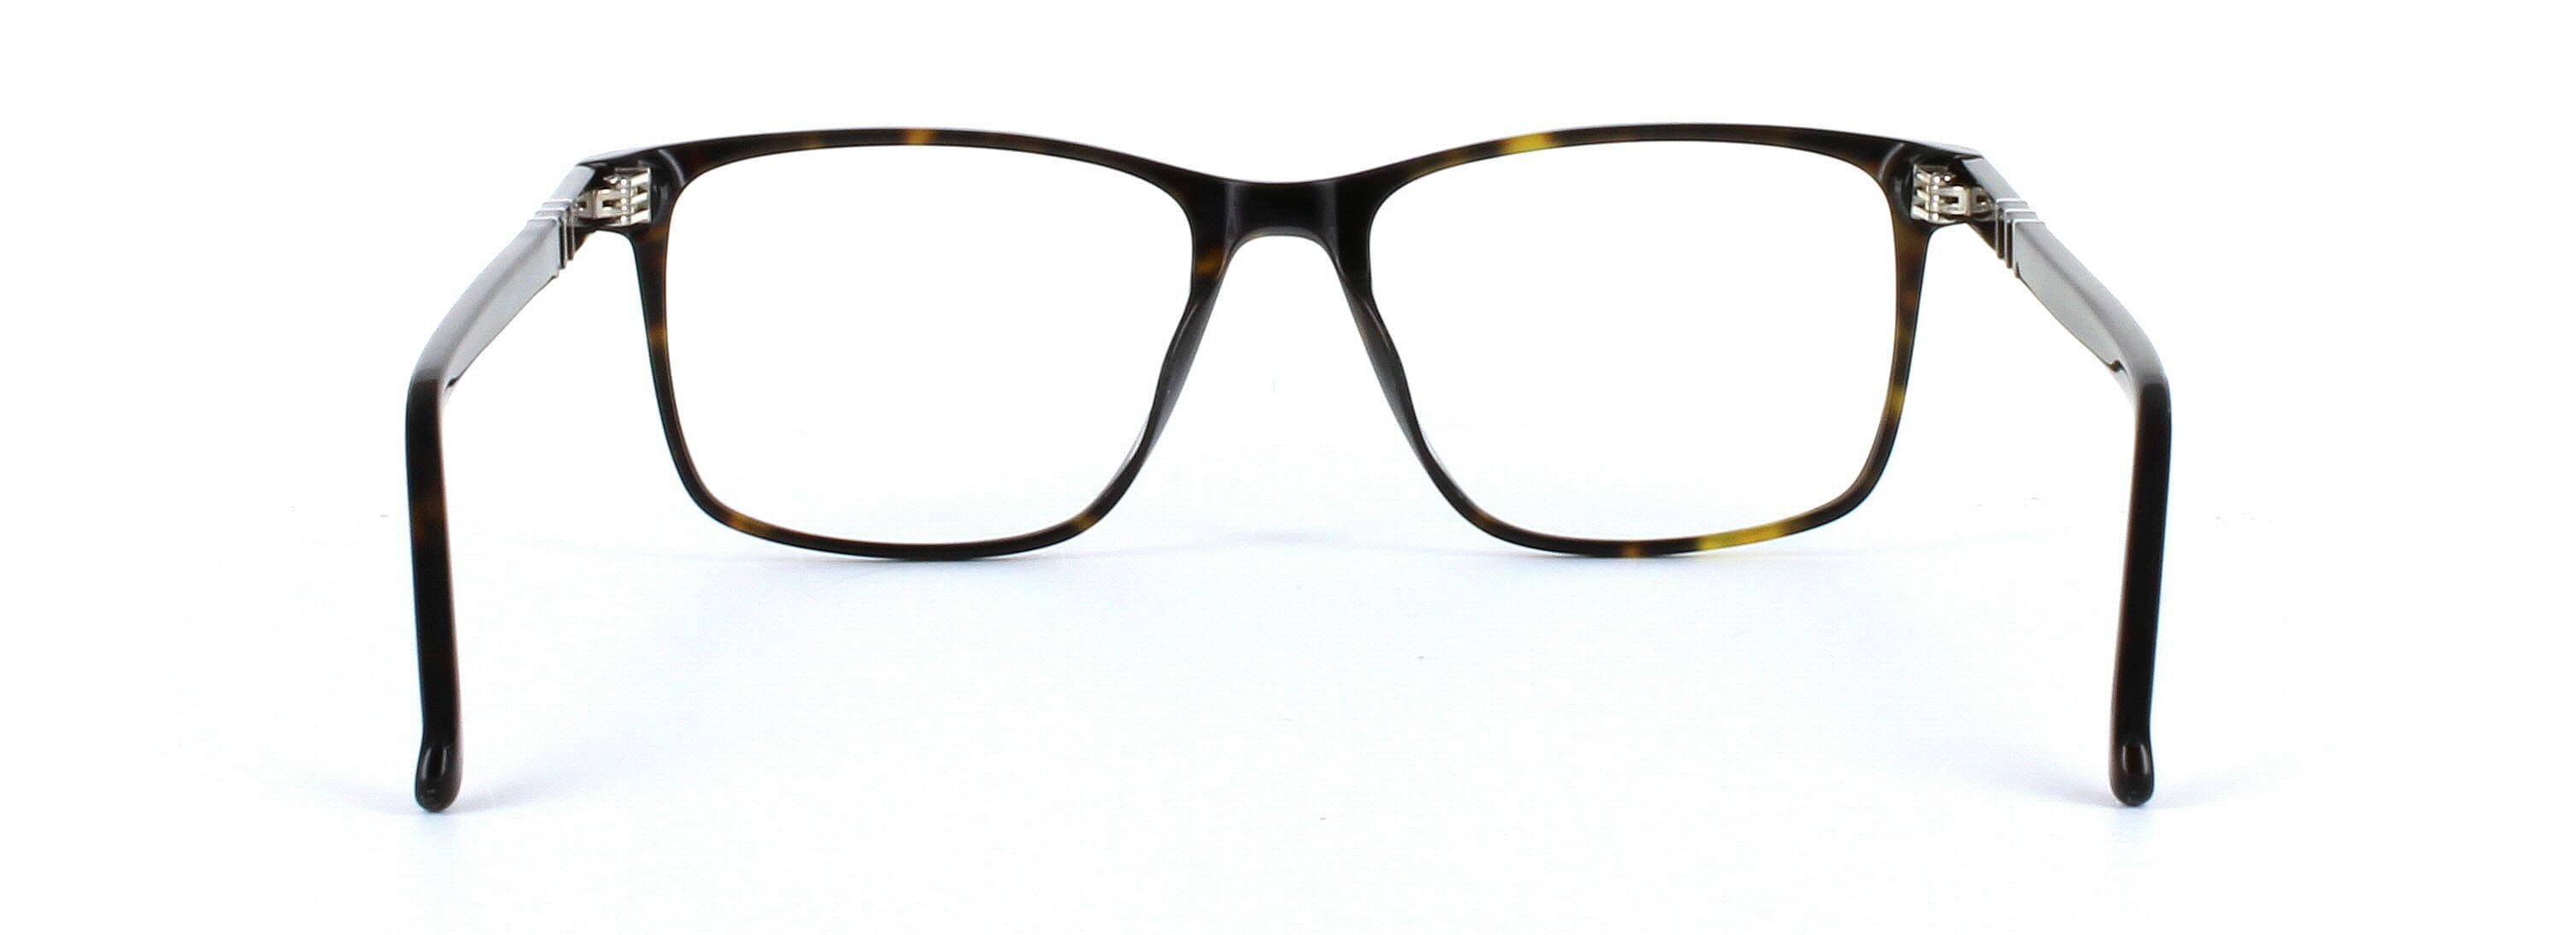 Bayley Lane Tortoise Full Rim Rectangular Acetate Glasses - Image View 3